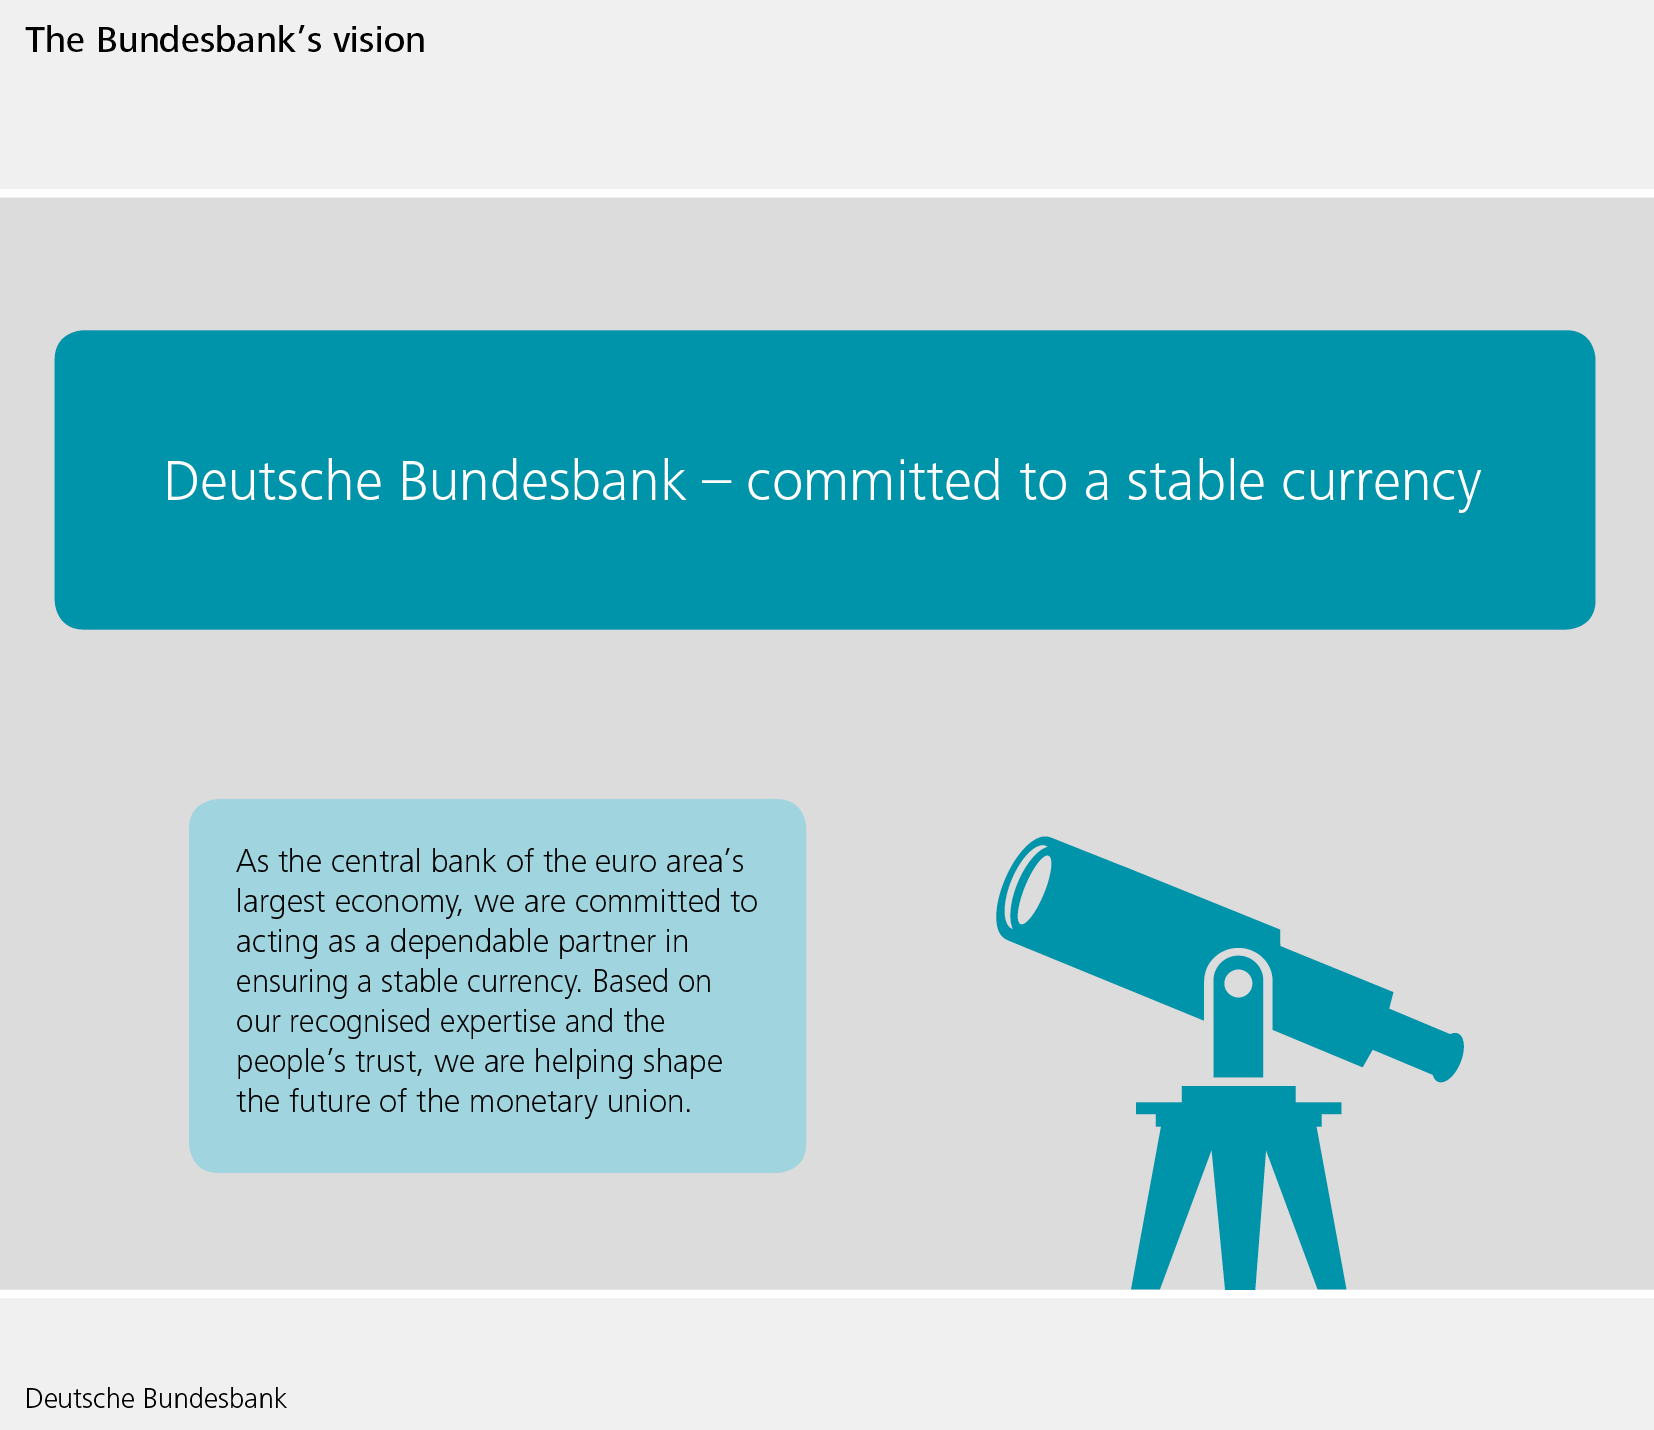 Graphical presentation of the Bundesbank's vision